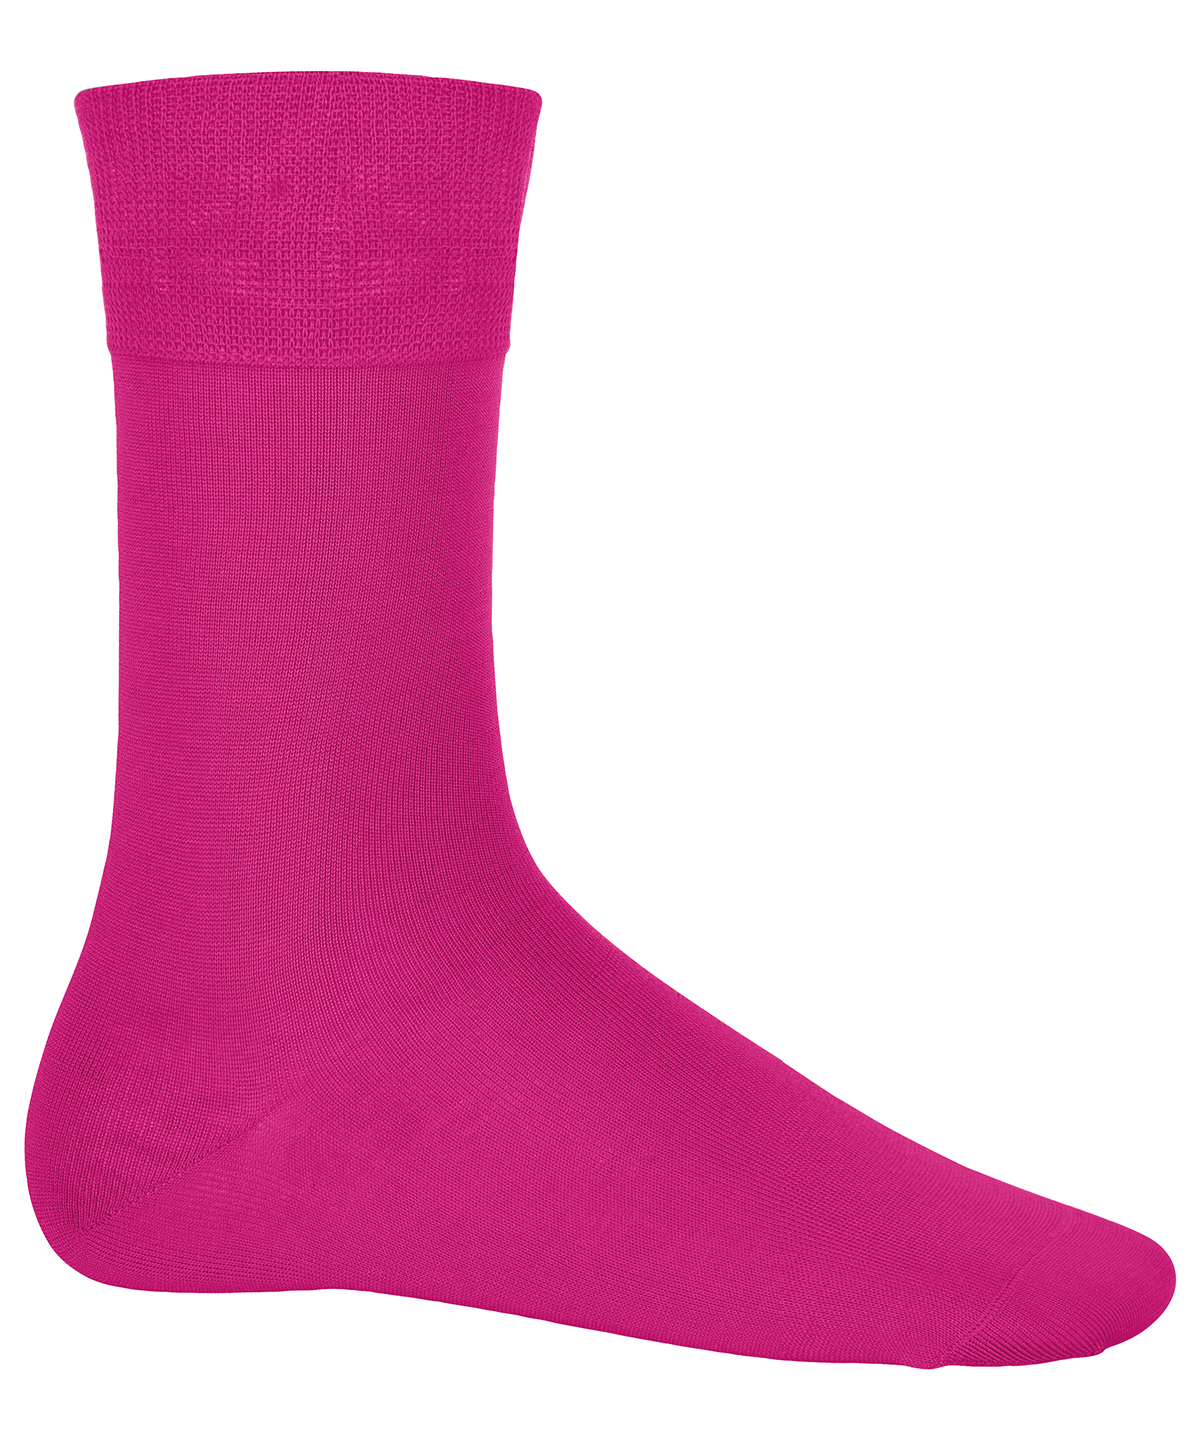 Cotton City Socks Fuchsia Size 1012